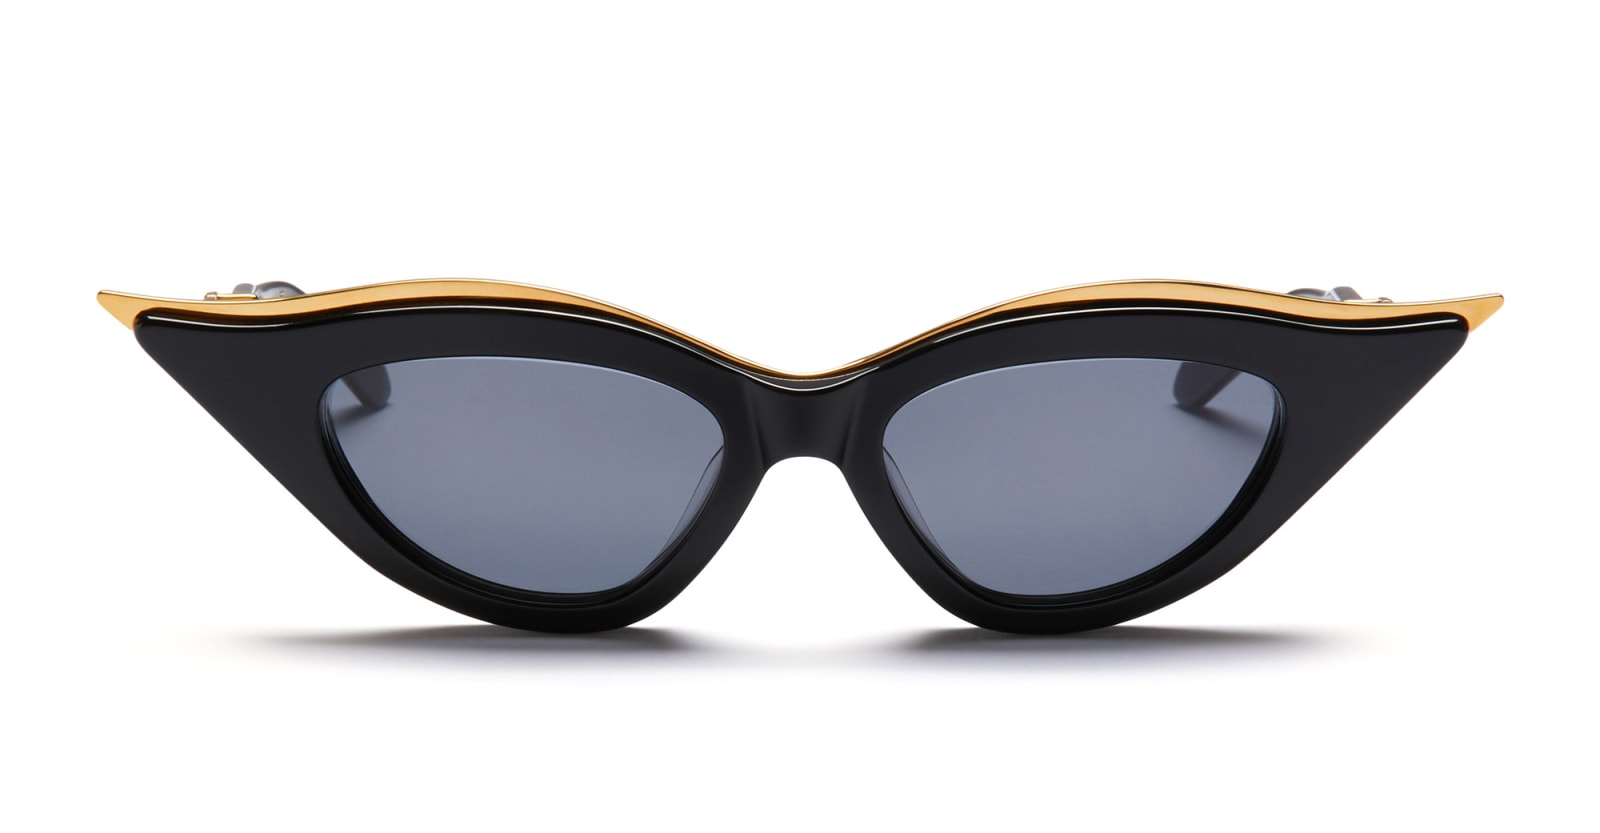 Valentino Goldcut-ii - Black/ Yellow Gold Sunglasses